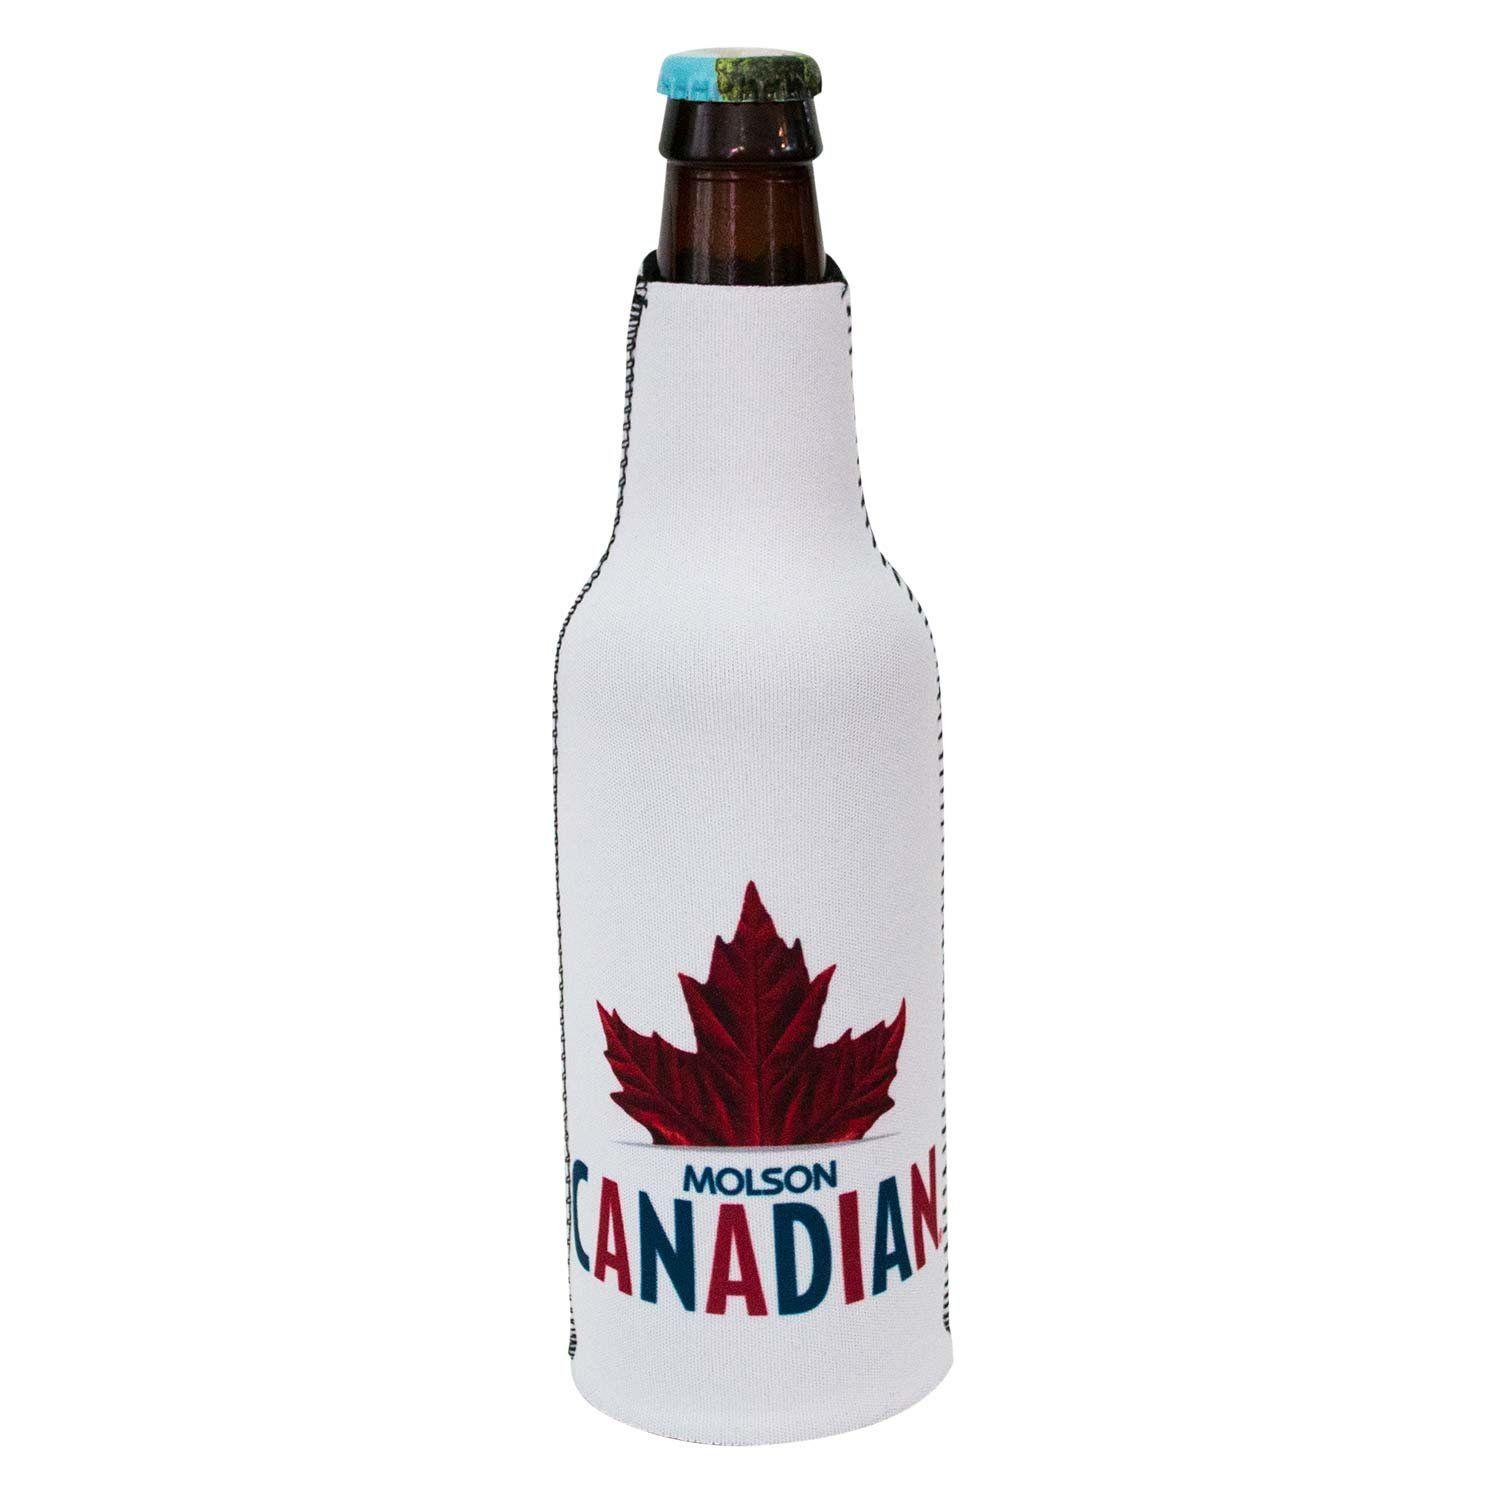 Canadian Leaf Logo - Amazon.com: Molson Canadian Leaf Logo Bottle Suit Cooler: Kitchen ...